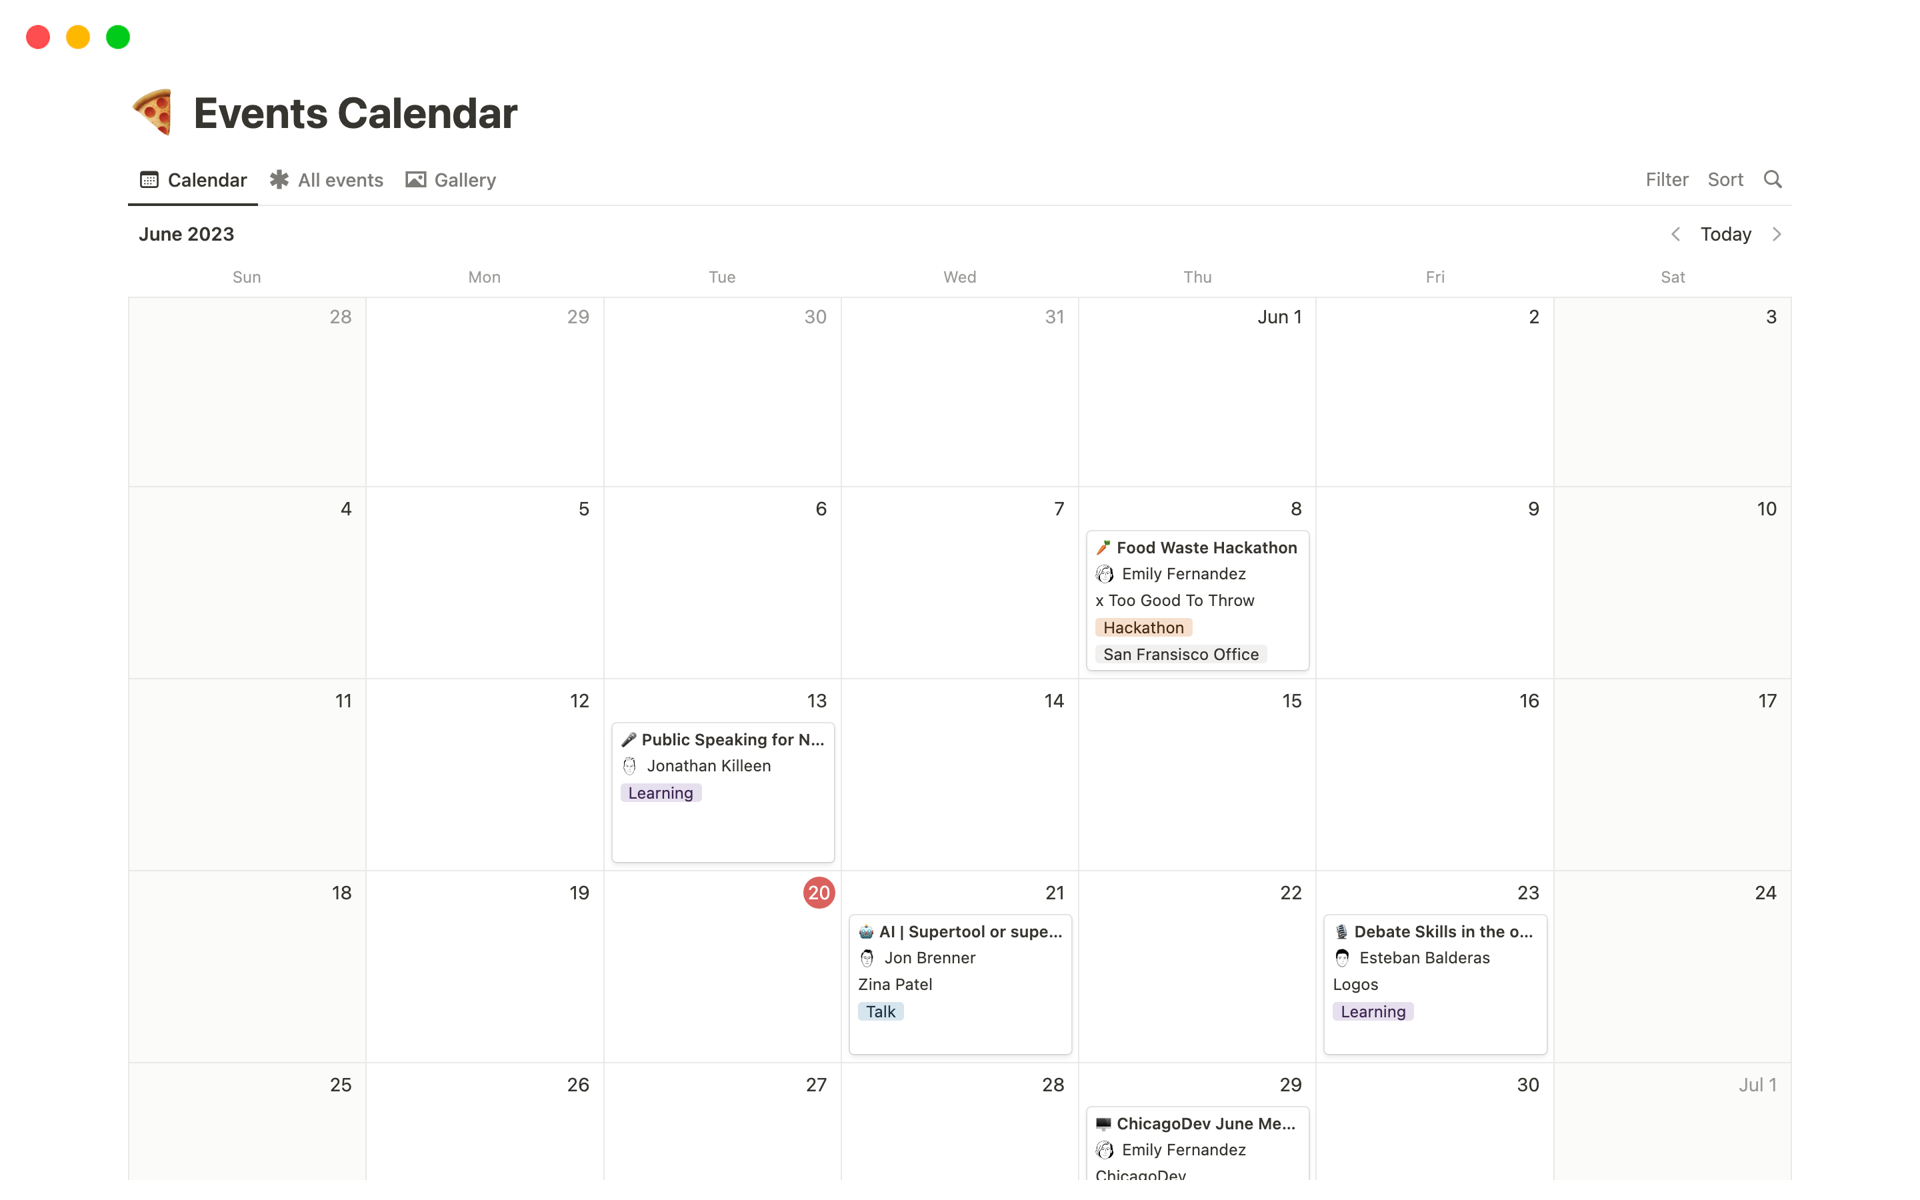 Events Calendar Notion Template